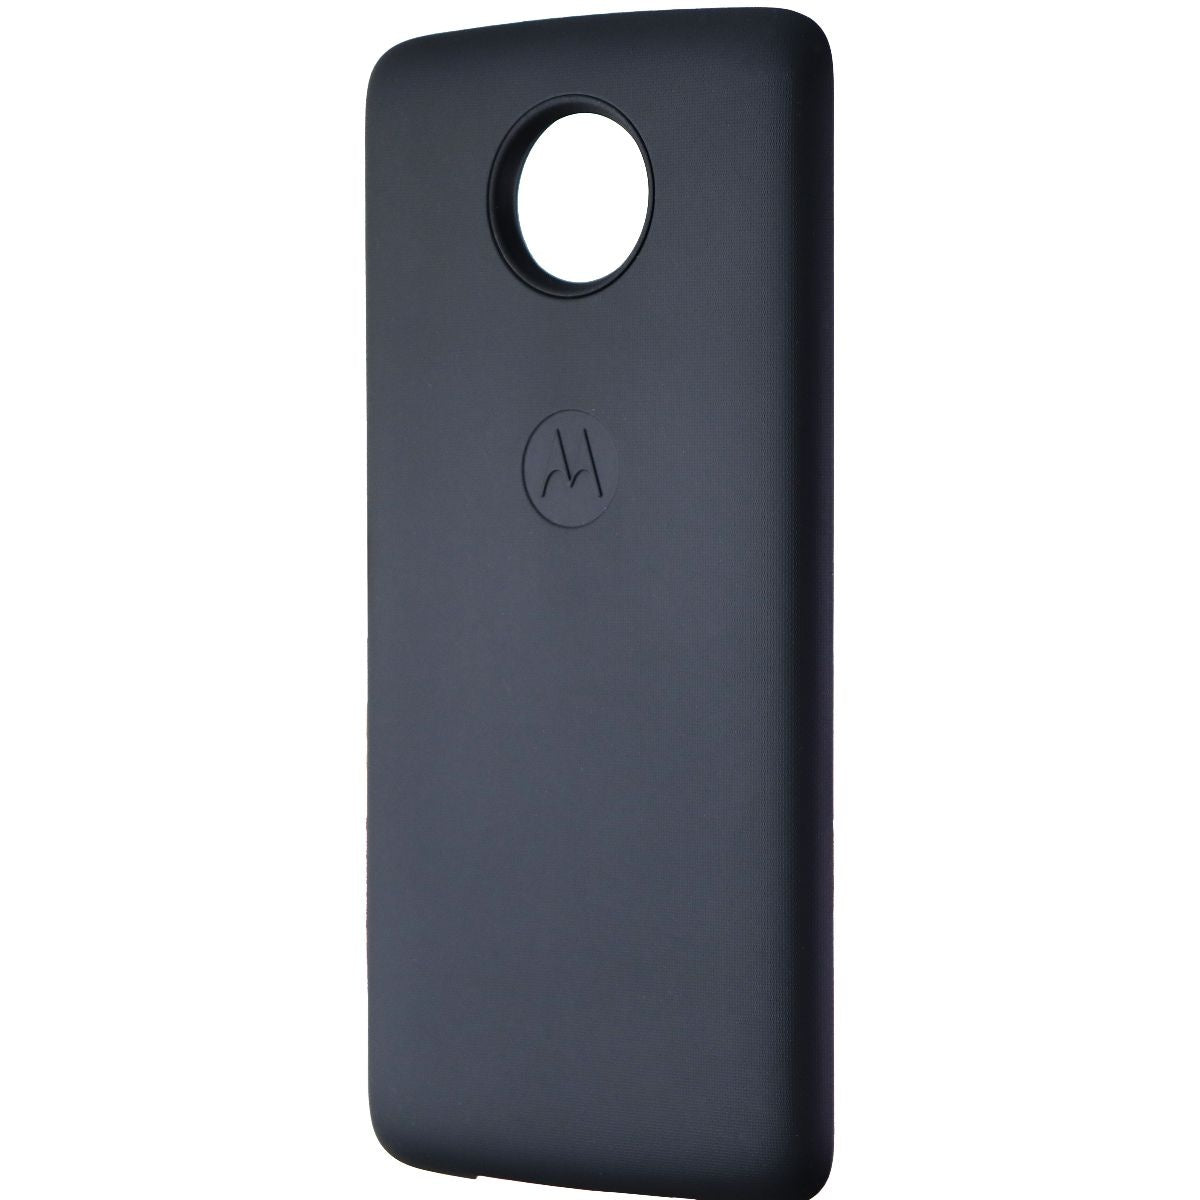 Motorola Moto Mods 2,220mAh Power Pack for Moto Z Phones - Black (MD100B) Cell Phone - Chargers & Cradles Motorola    - Simple Cell Bulk Wholesale Pricing - USA Seller